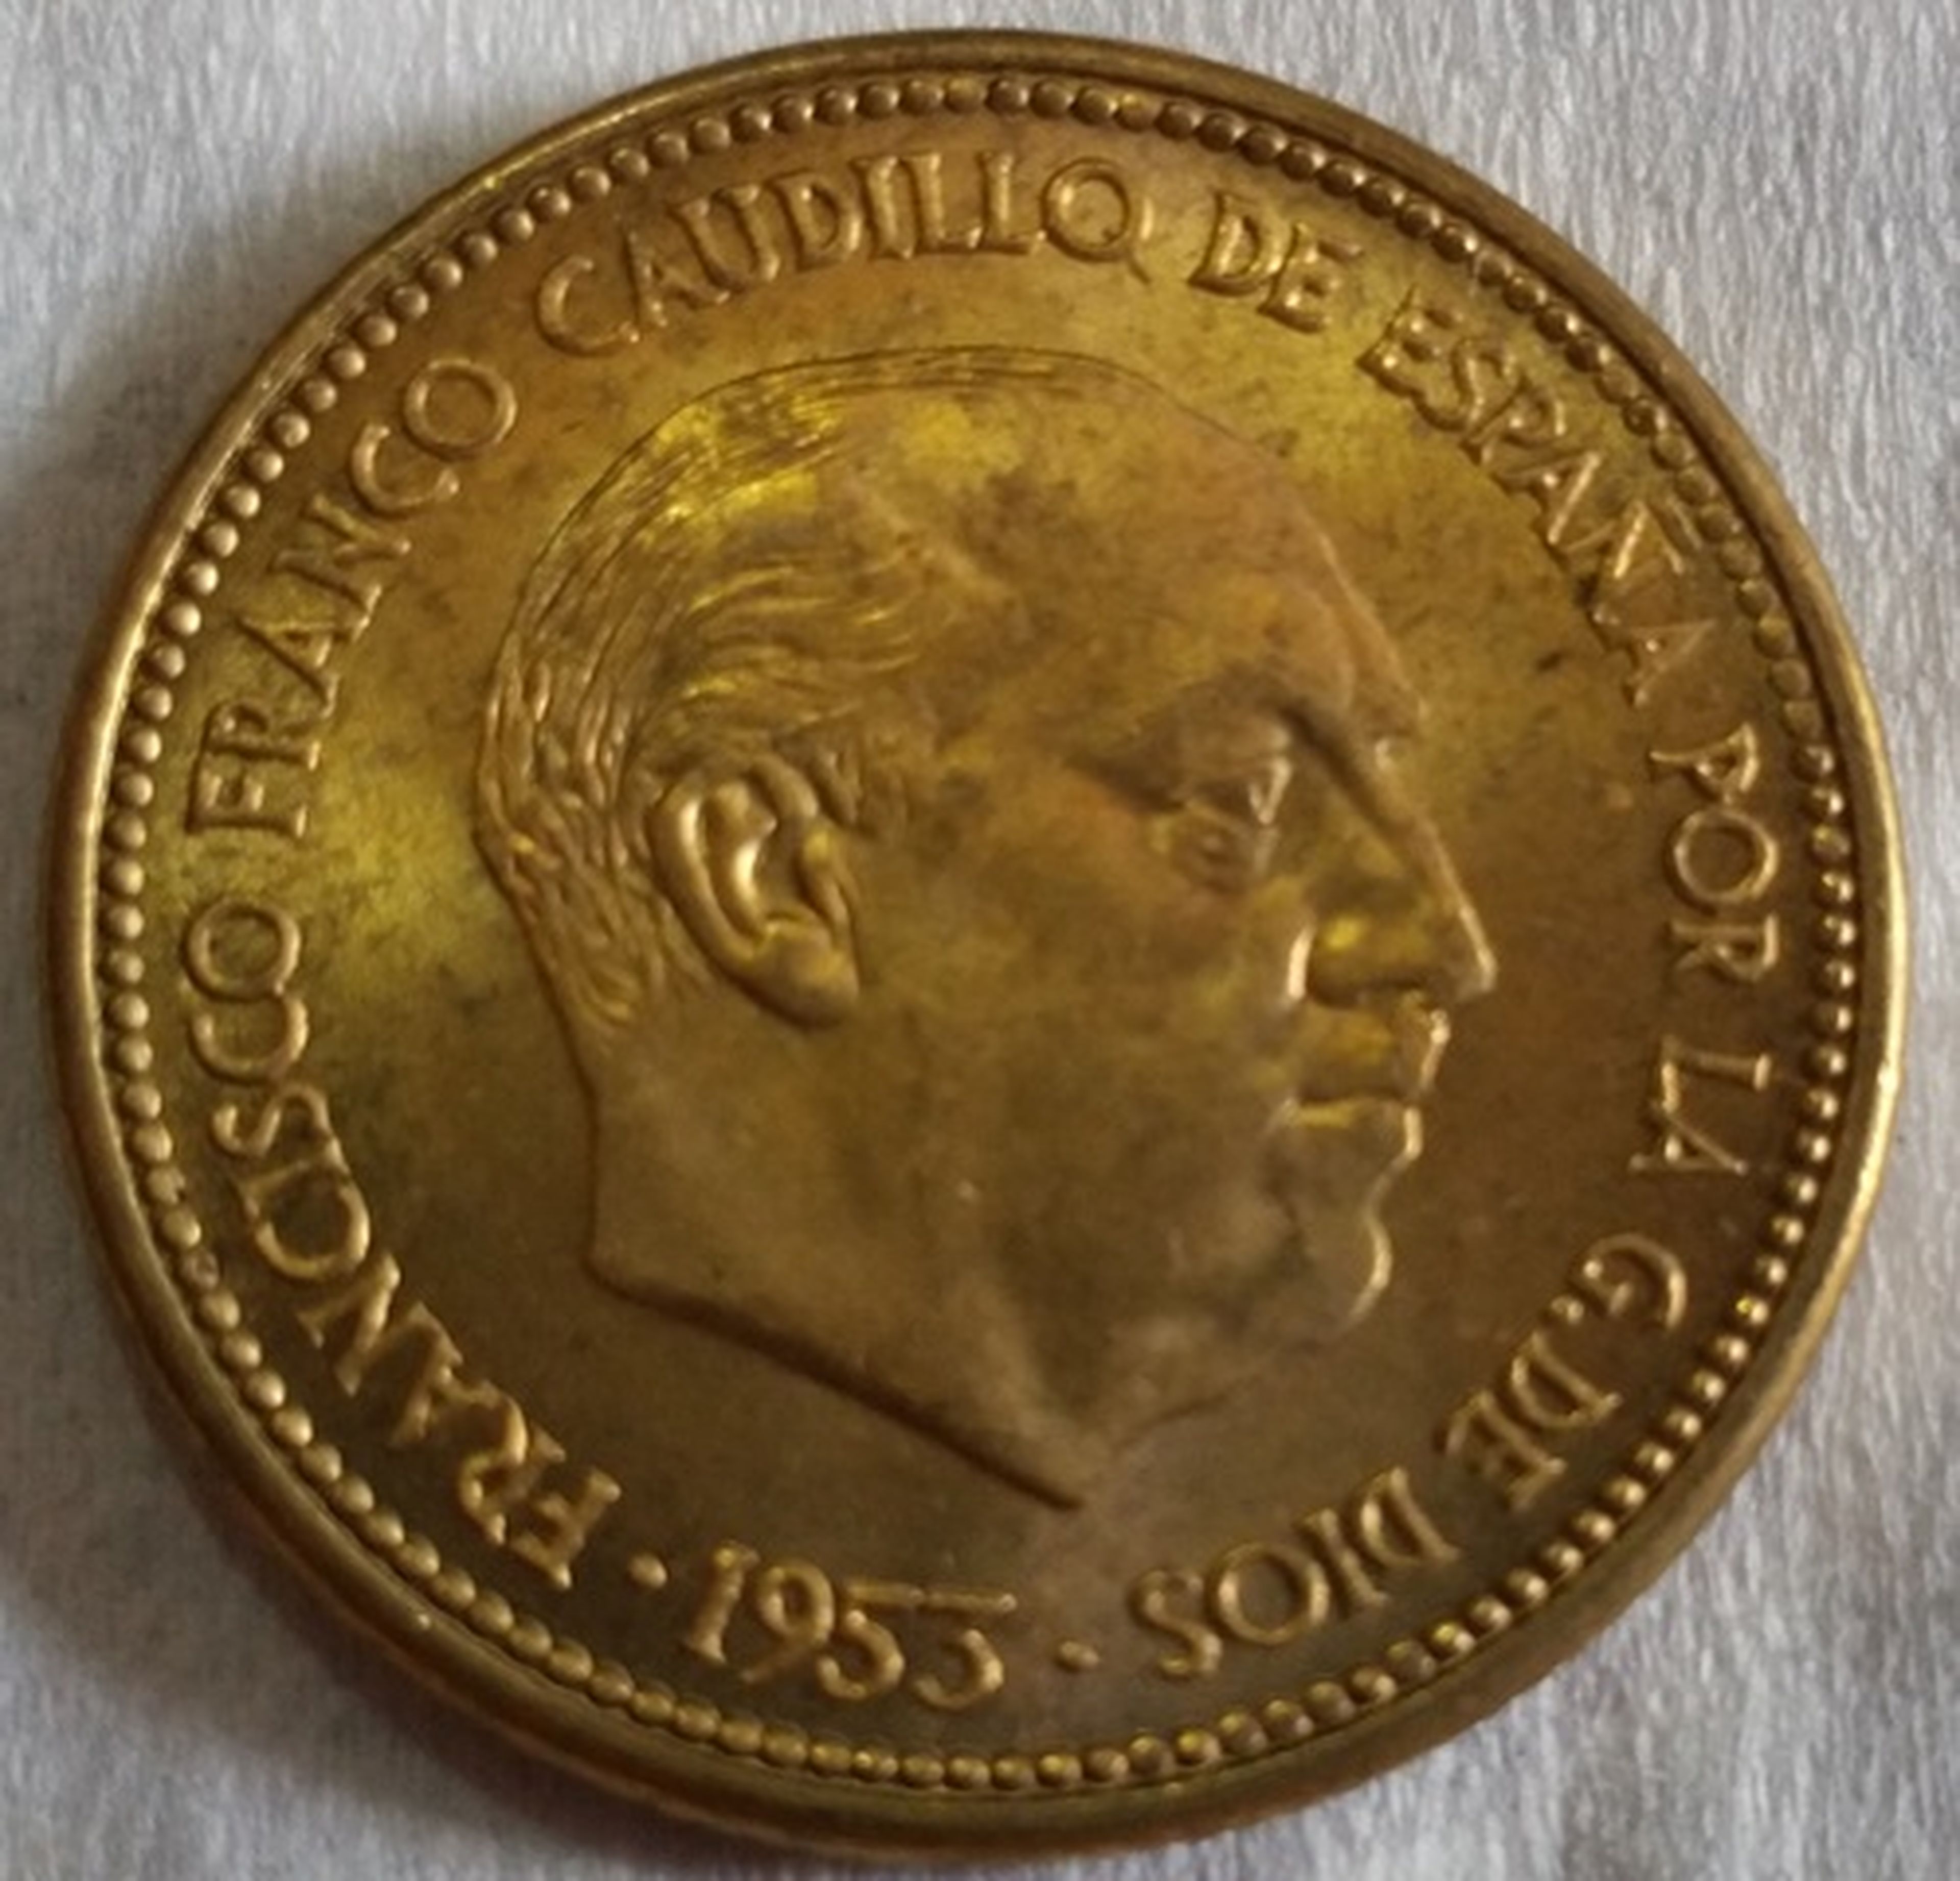 25 pesetas de 1953